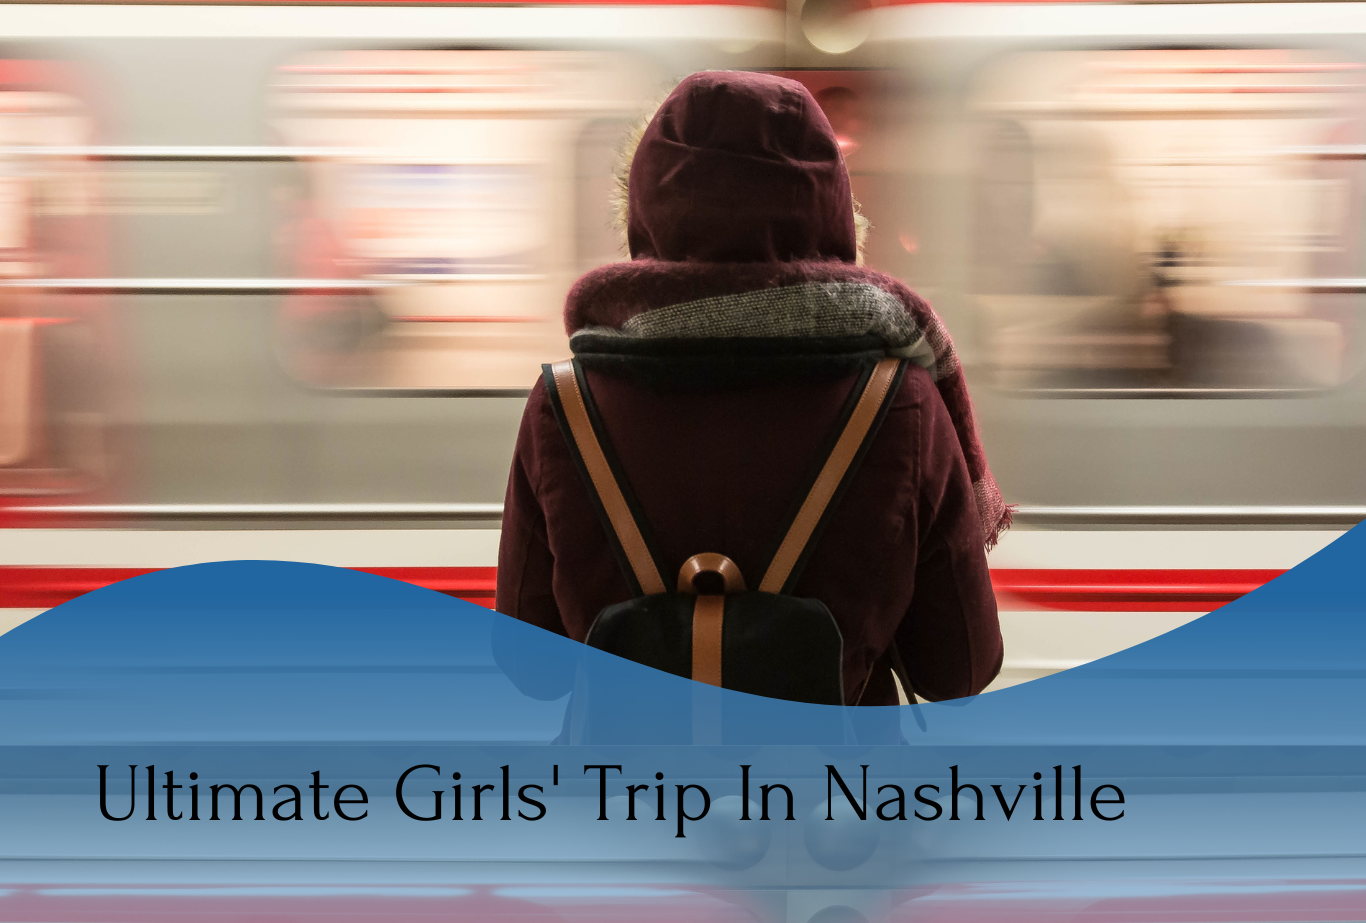 Ultimate girls' trip in Nashville!